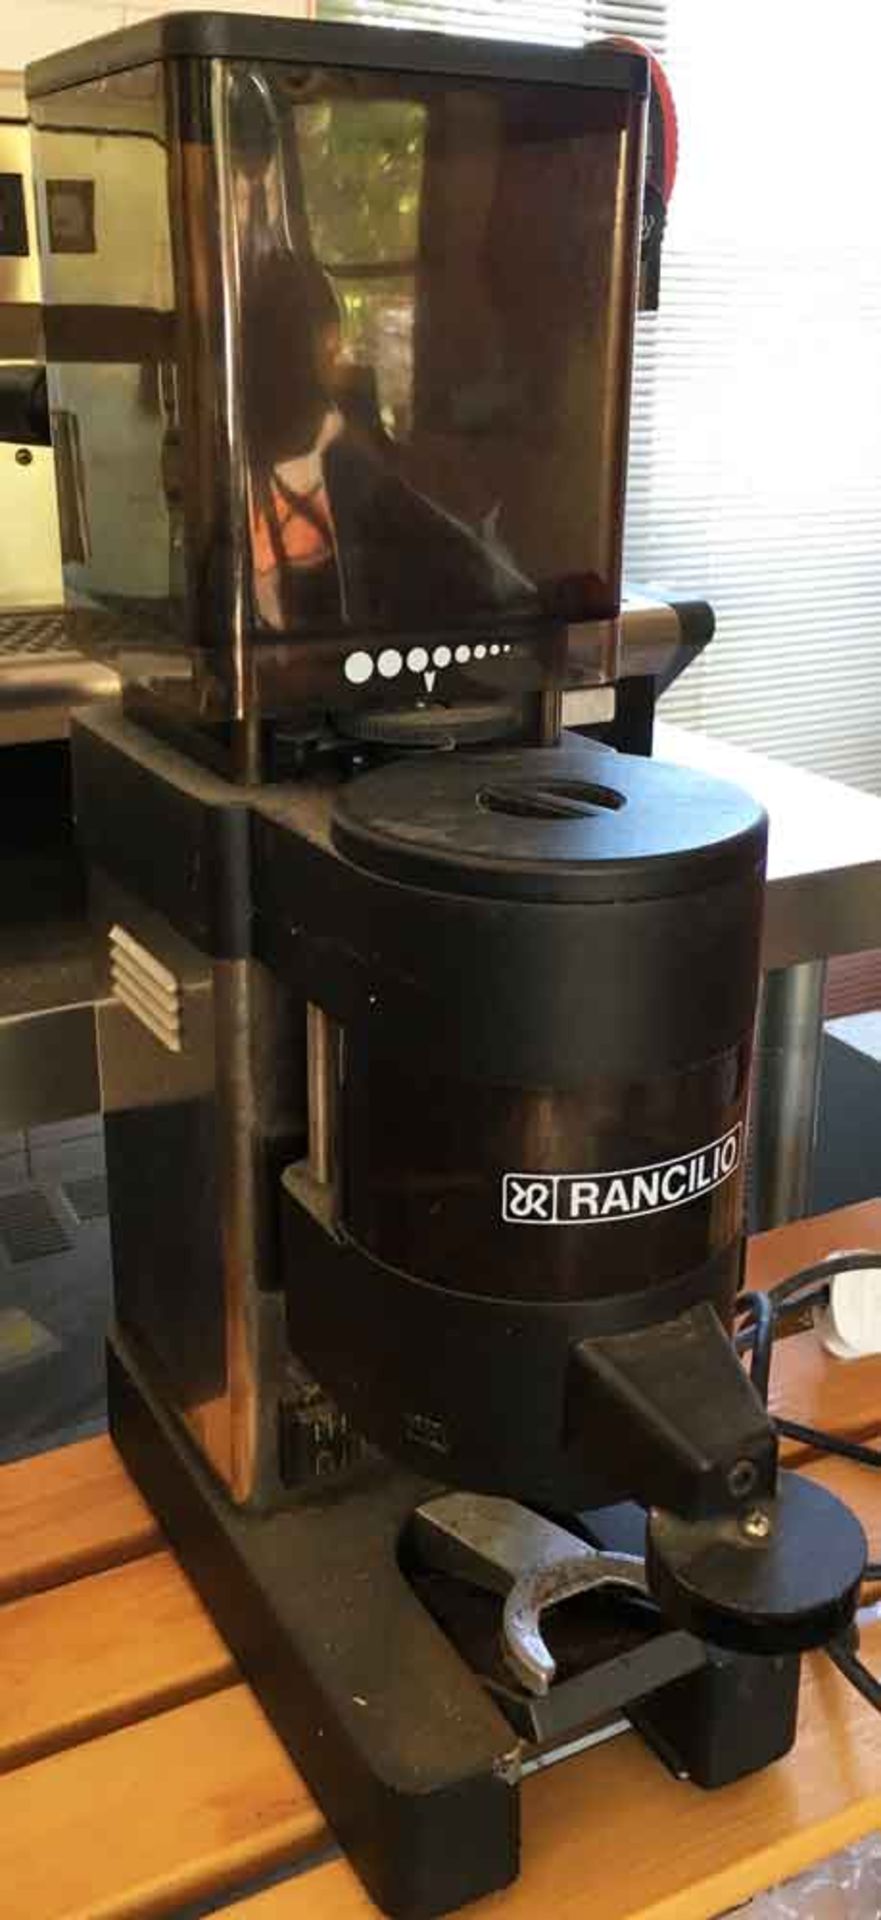 Rancilio Commercial Coffee Grinder/Dispenser